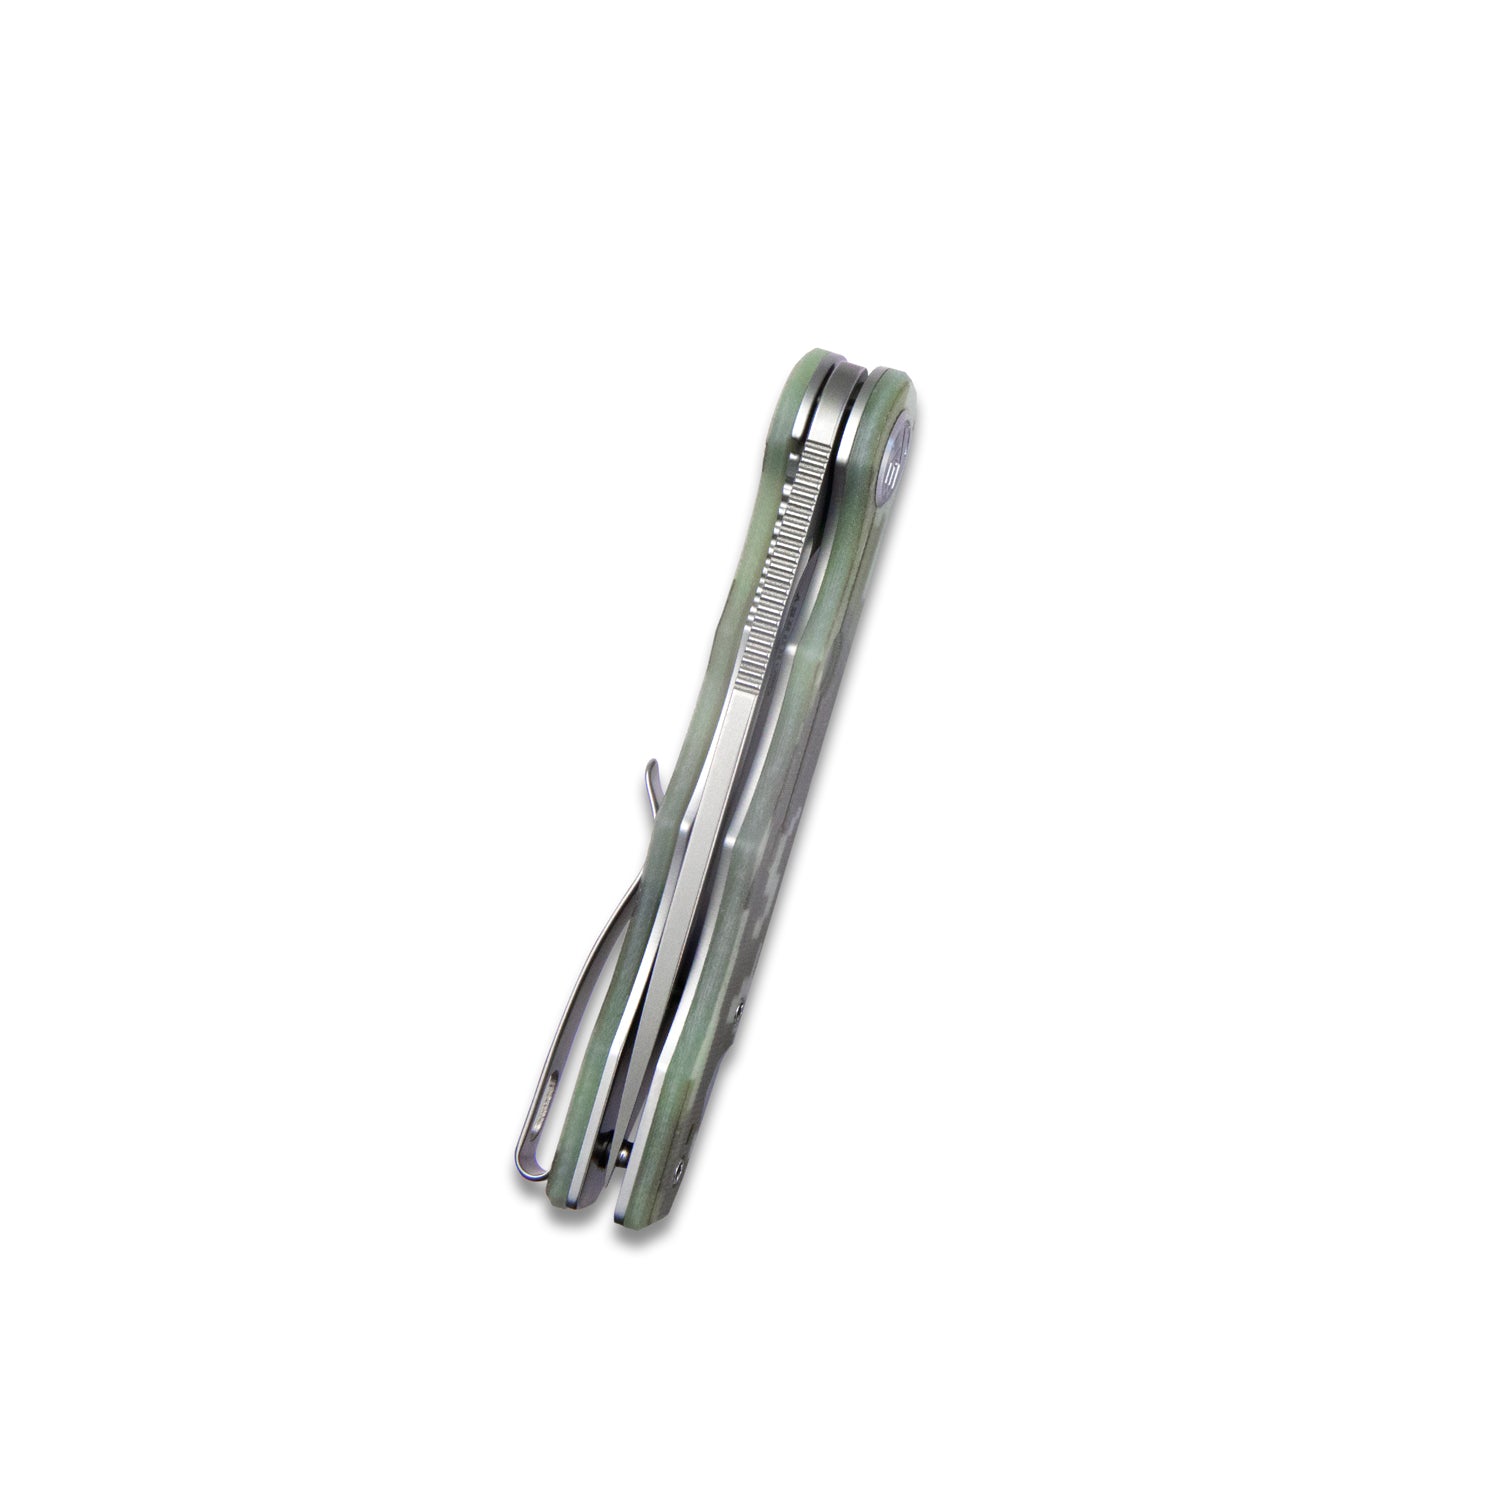 Kubey Mizo Liner Lock Flipper Folding Knife Camo G10 Handle 3.15" Bead Blast AUS-10 KU312E